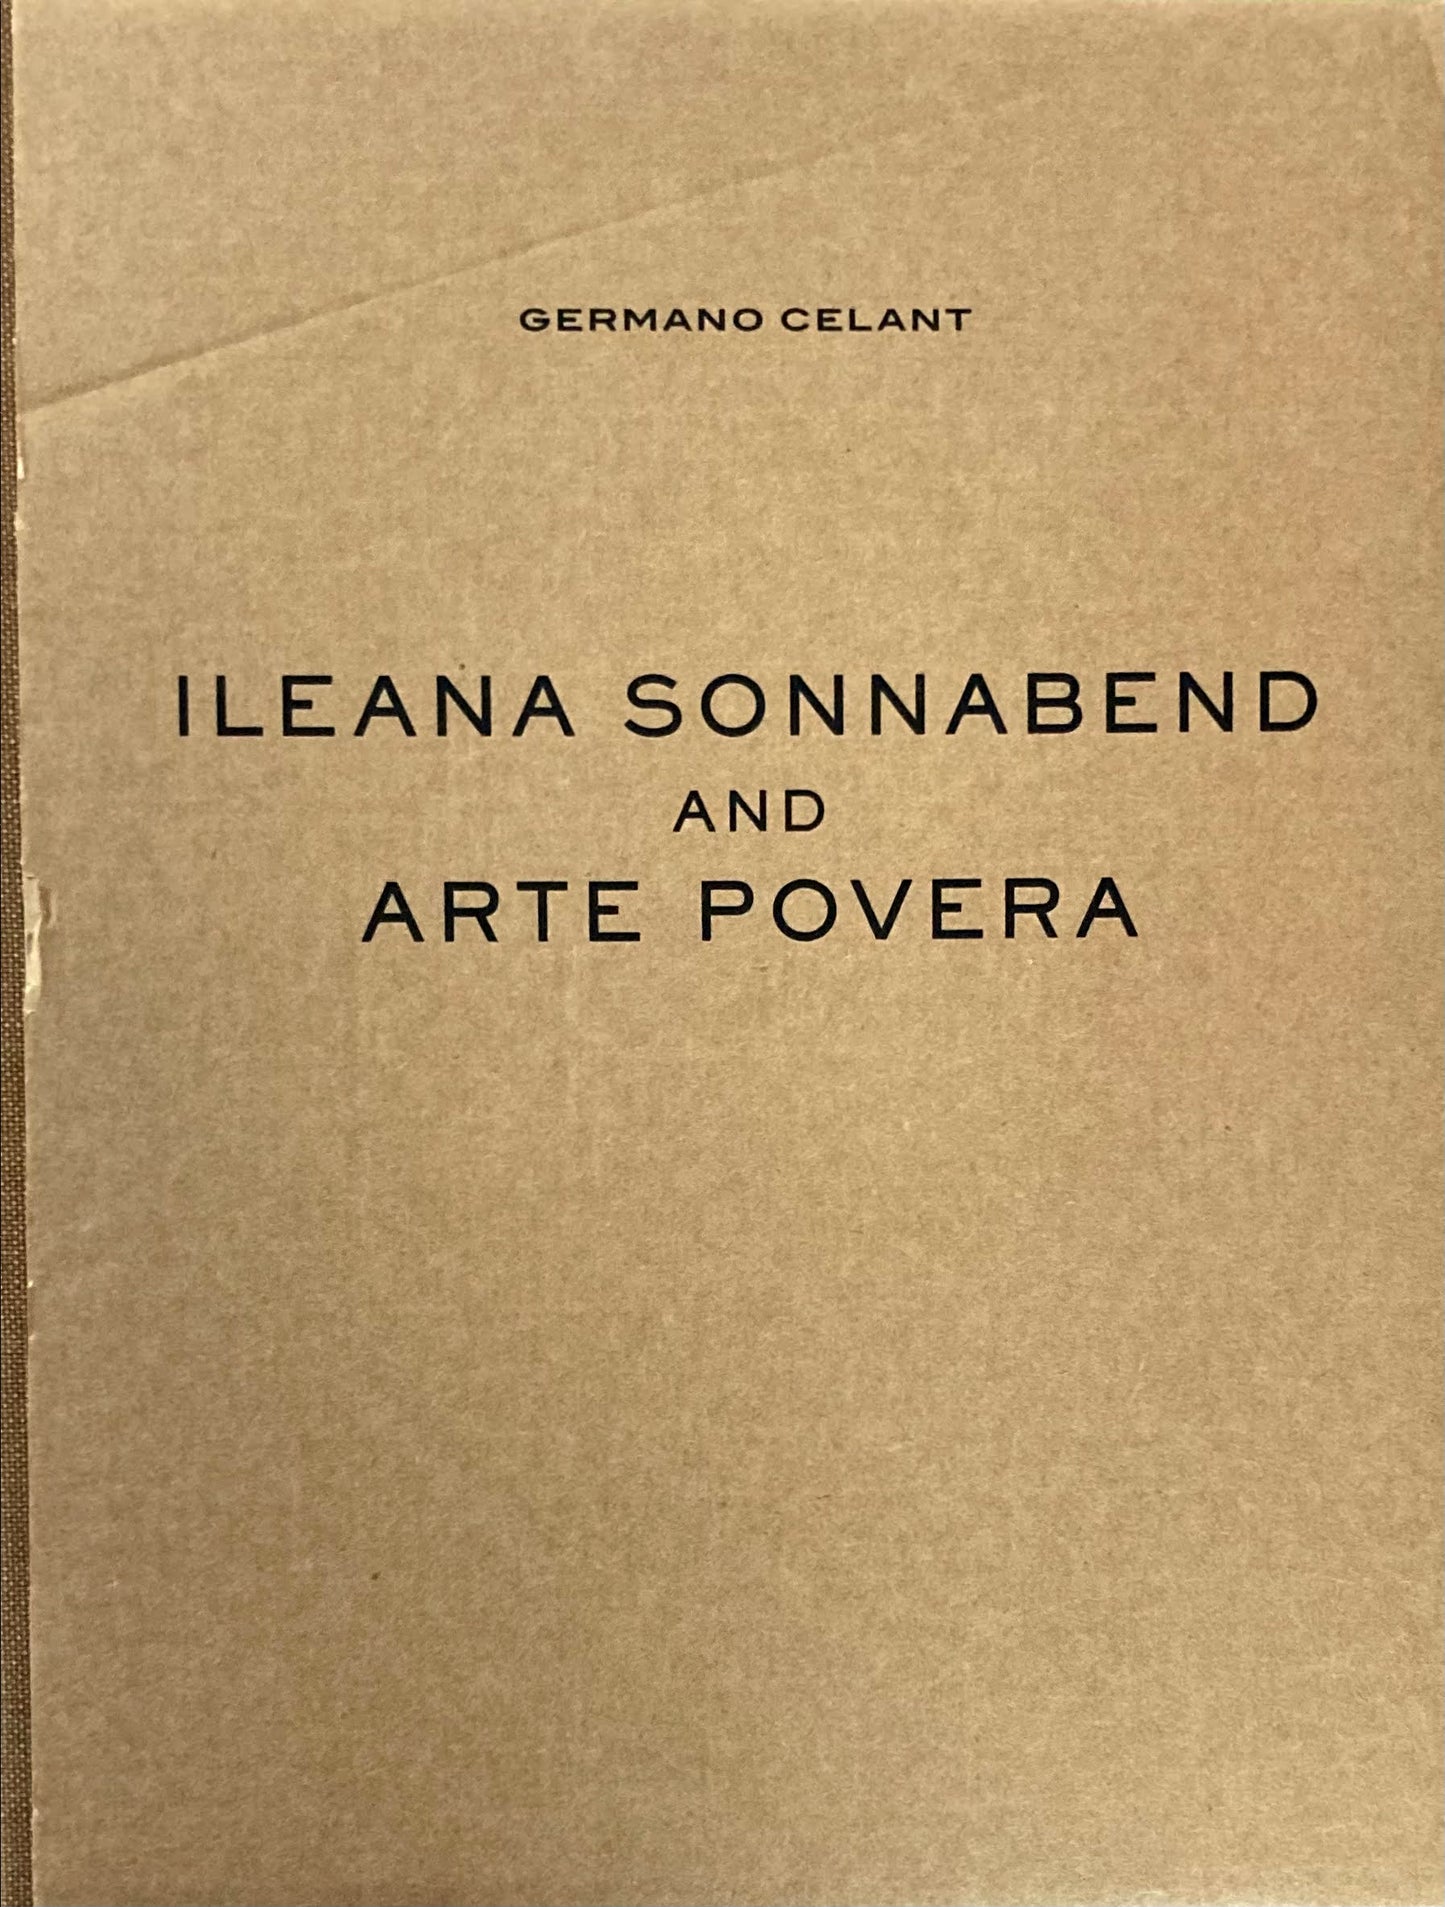 ILEANA SONNABEND AND ARTE POVERA  GERMANO CELANT